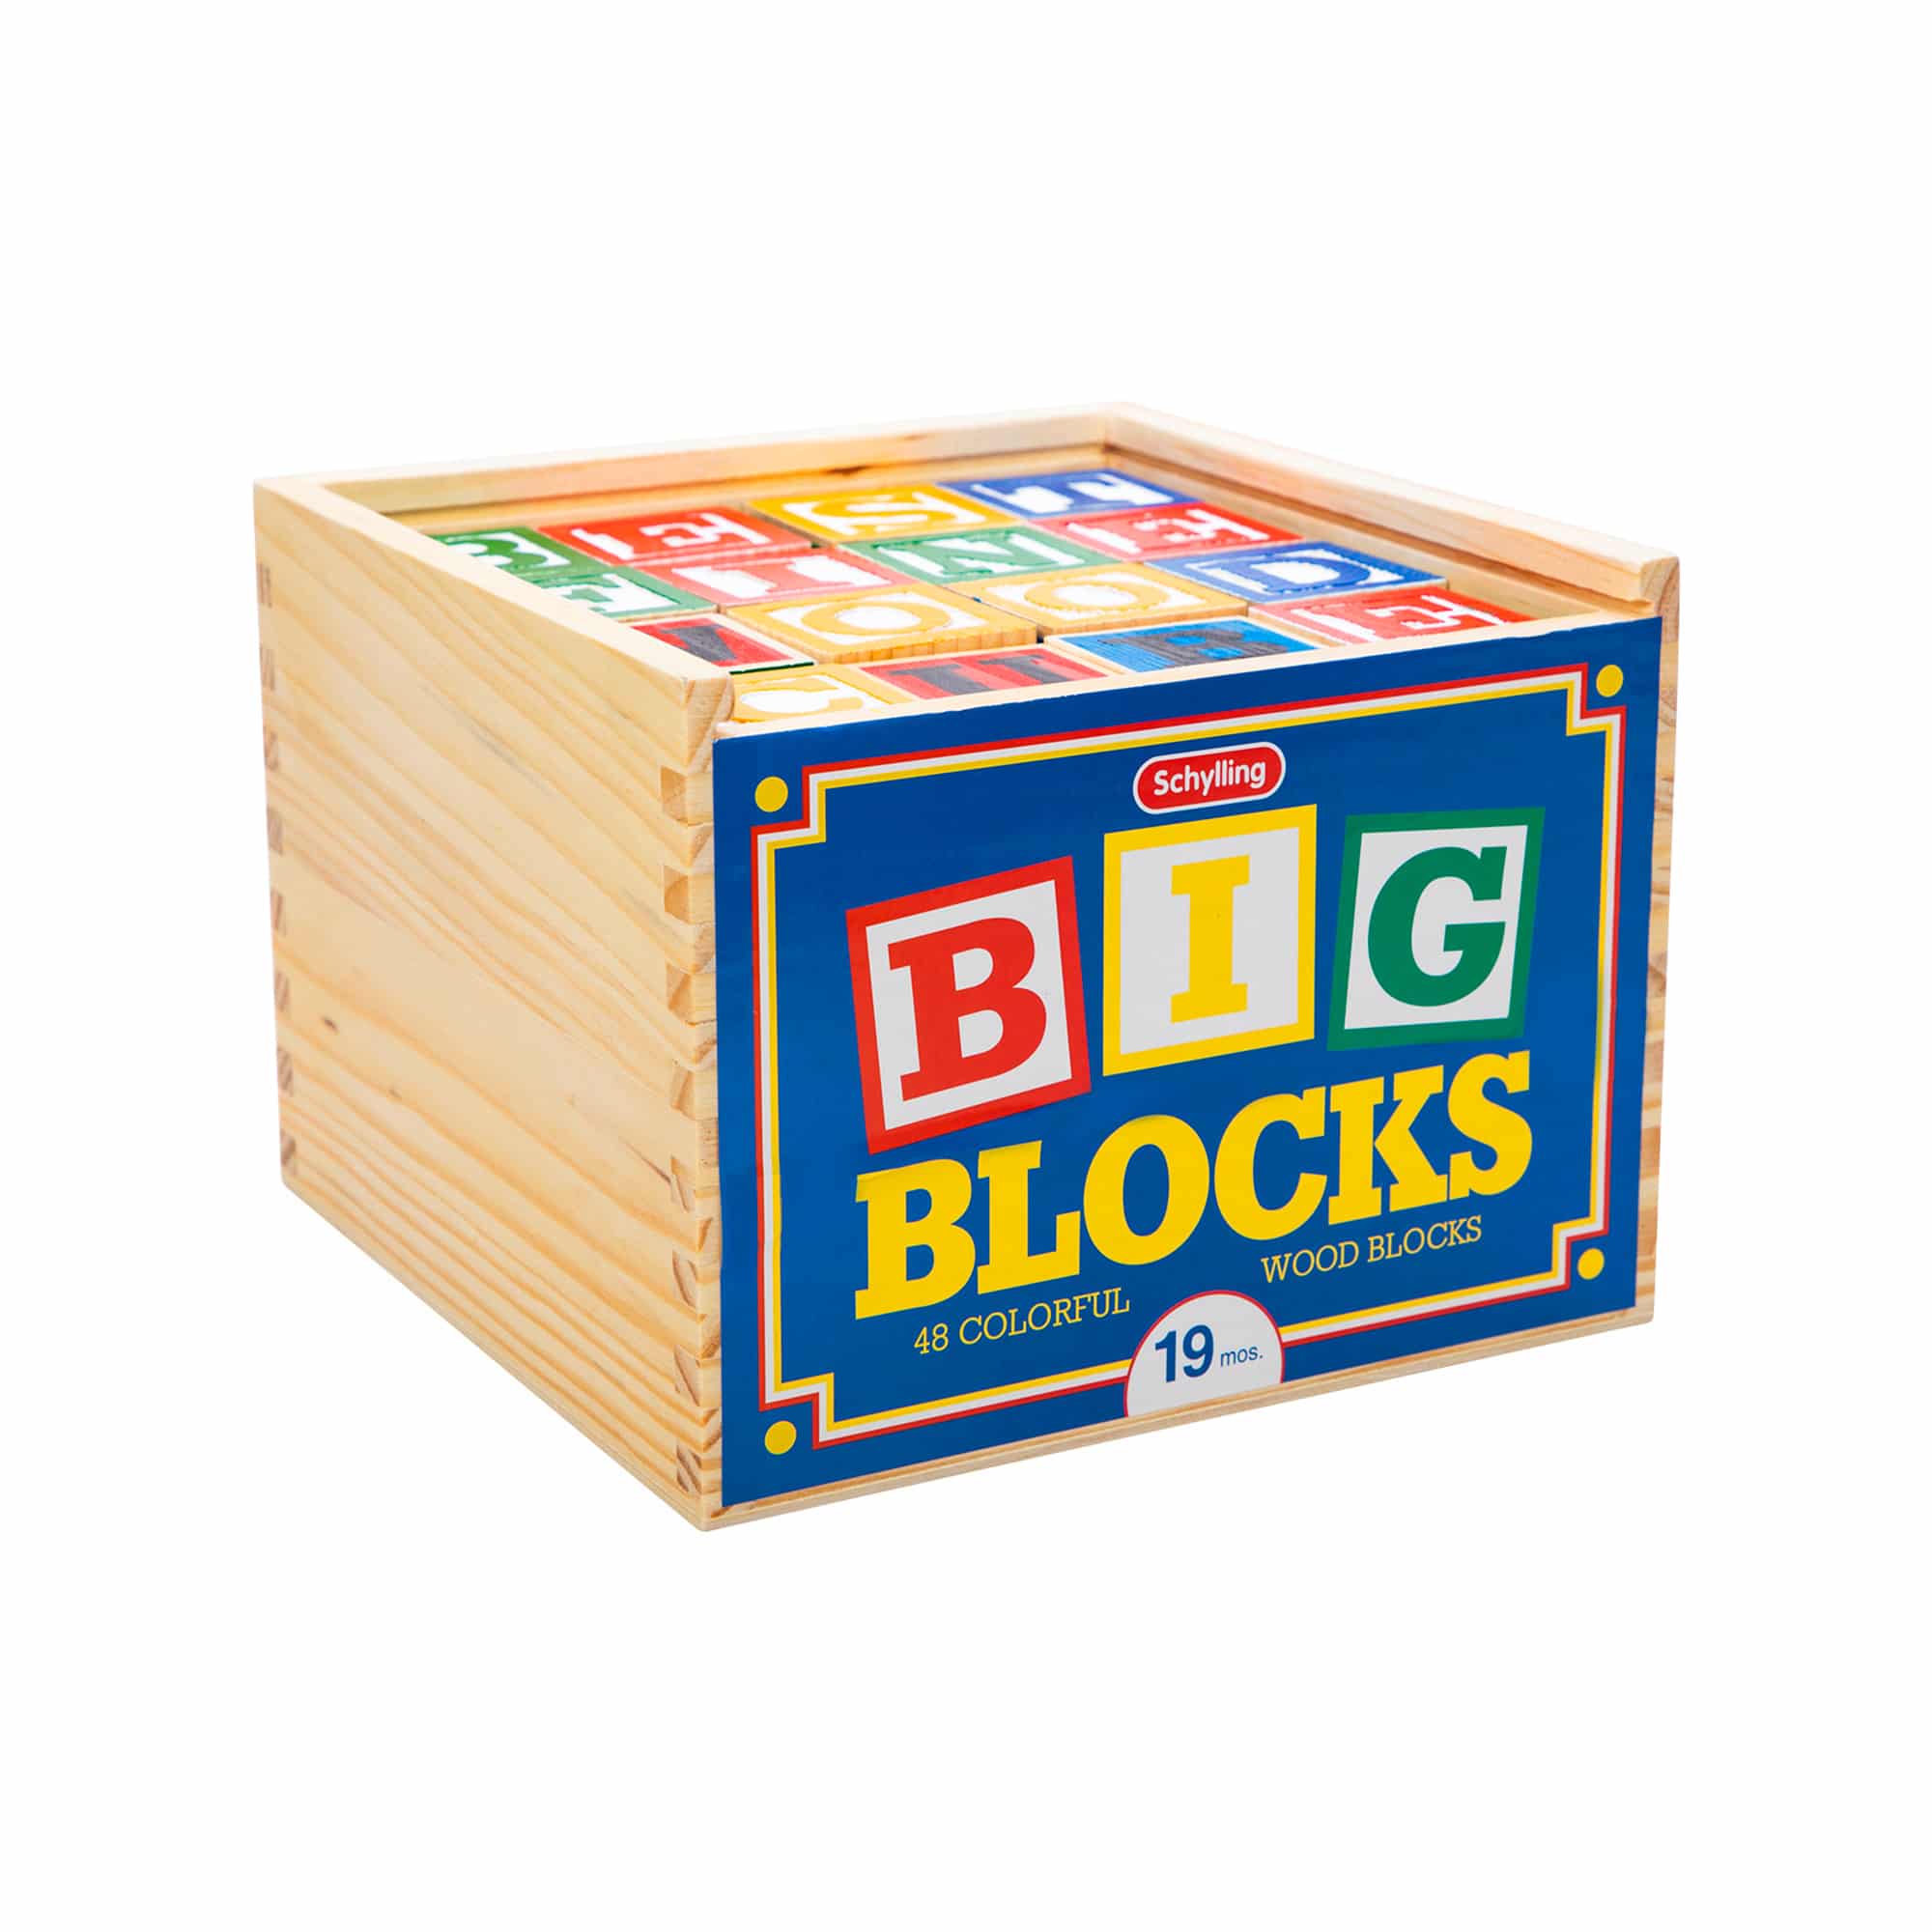 large toy wooden blocks